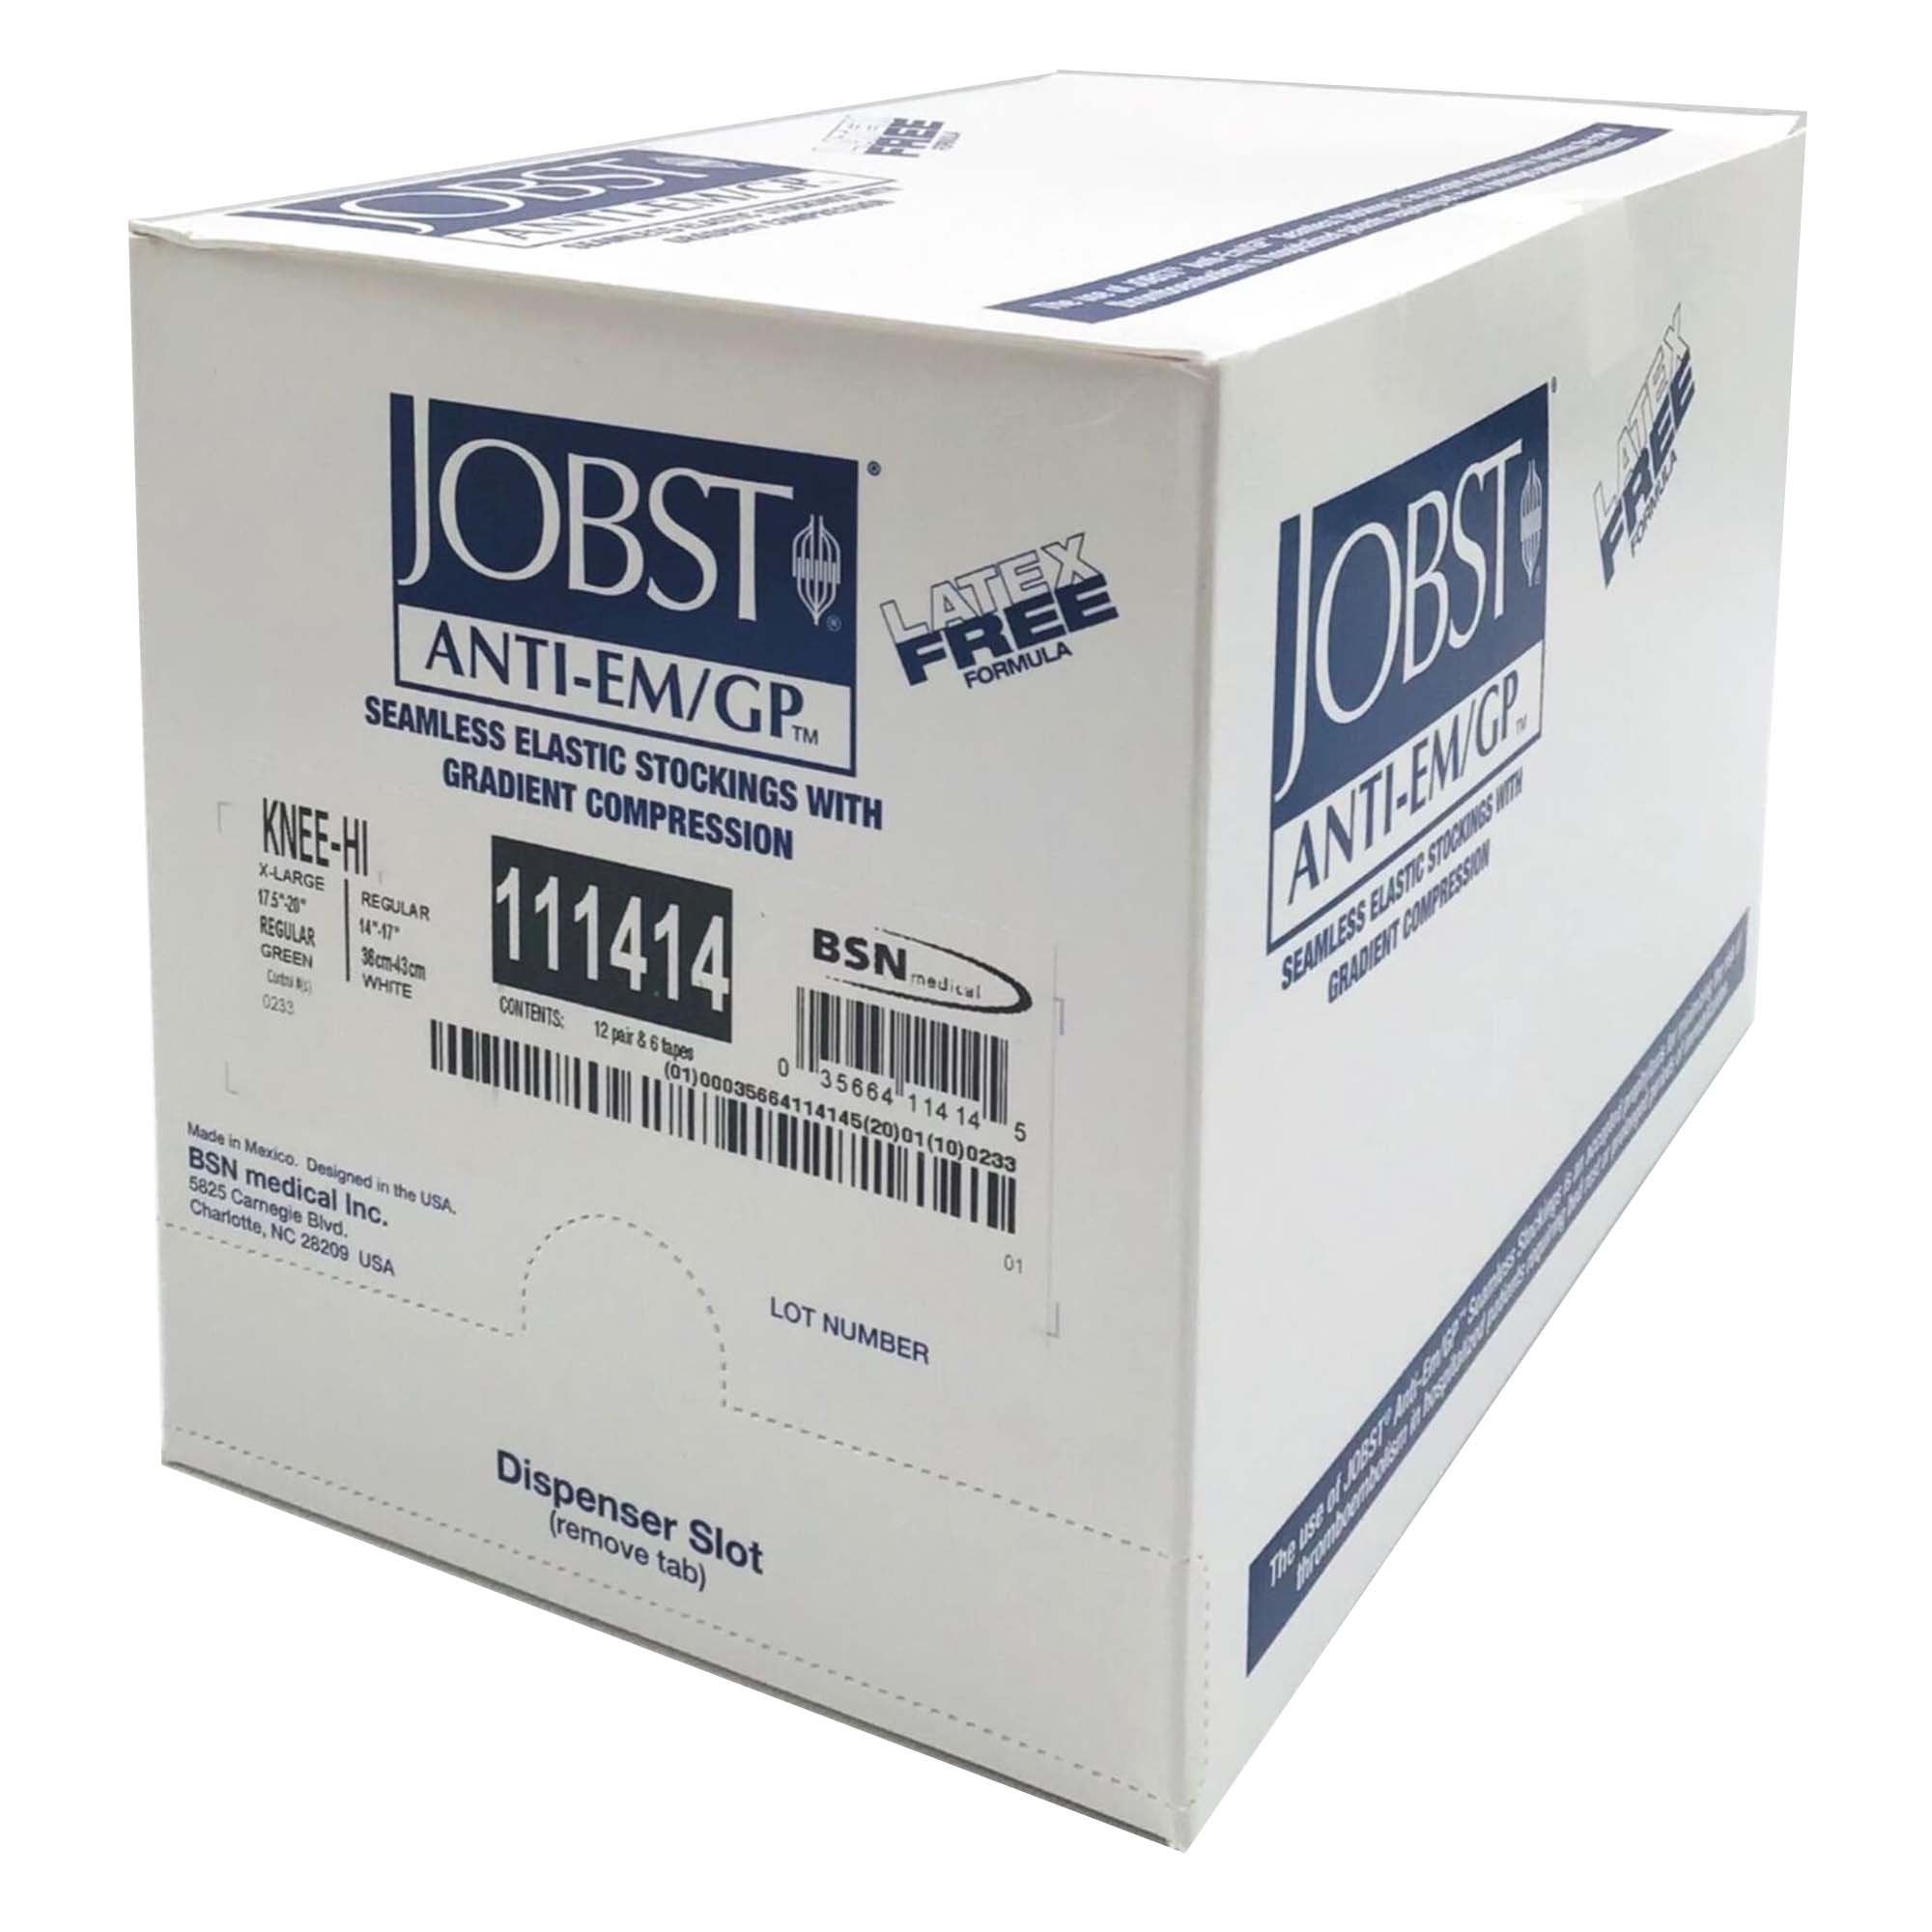 Anti-embolism Stocking JOBST Anti-Em/GPT Knee High X-Large / Regular White Inspection Toe